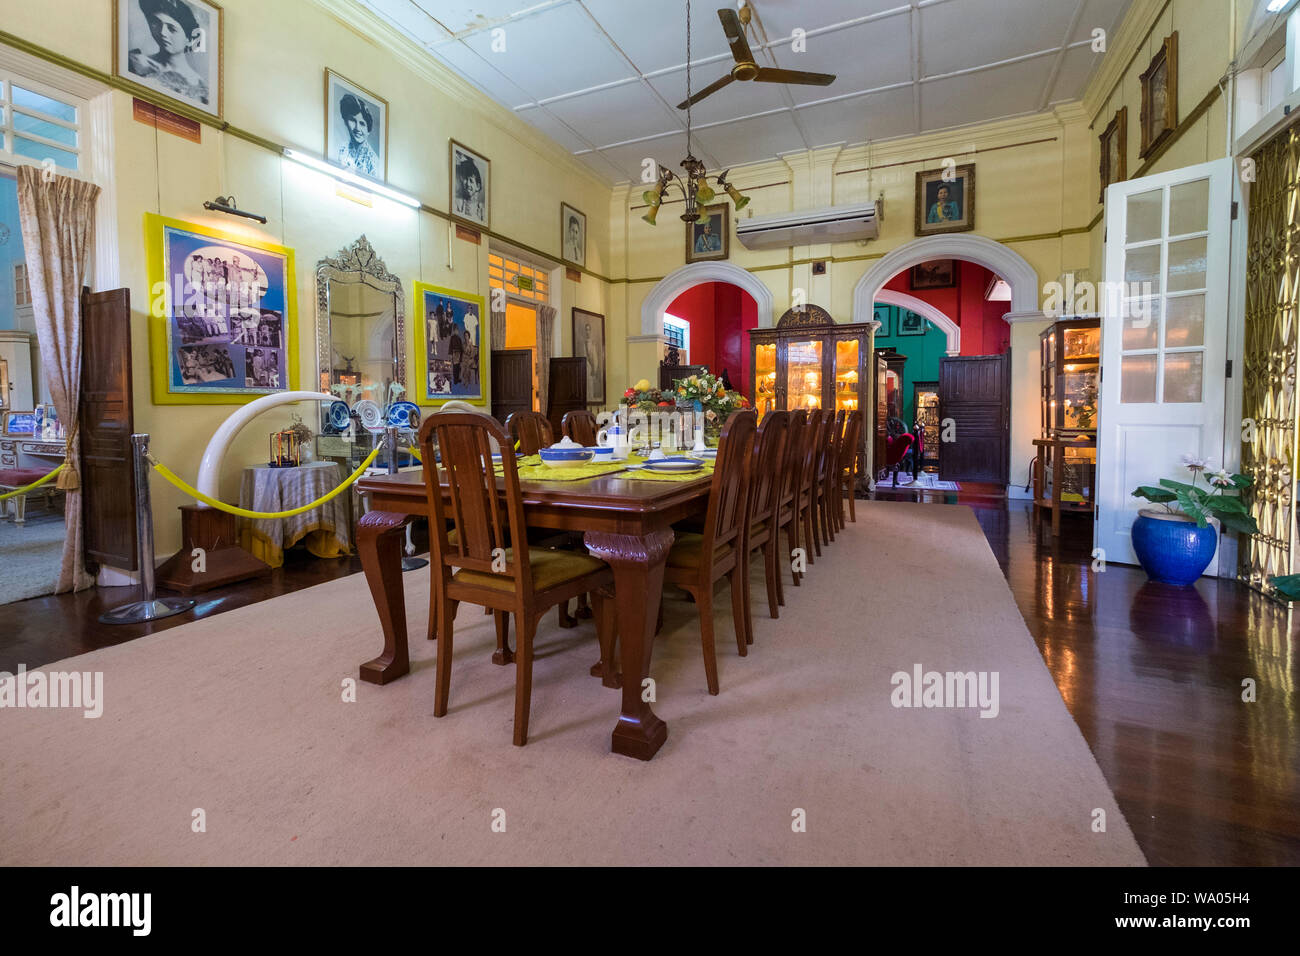 Dining room at Diraja Istana Batu, former home to Sultans, in Kota Bharu, Malaysia. Stock Photo